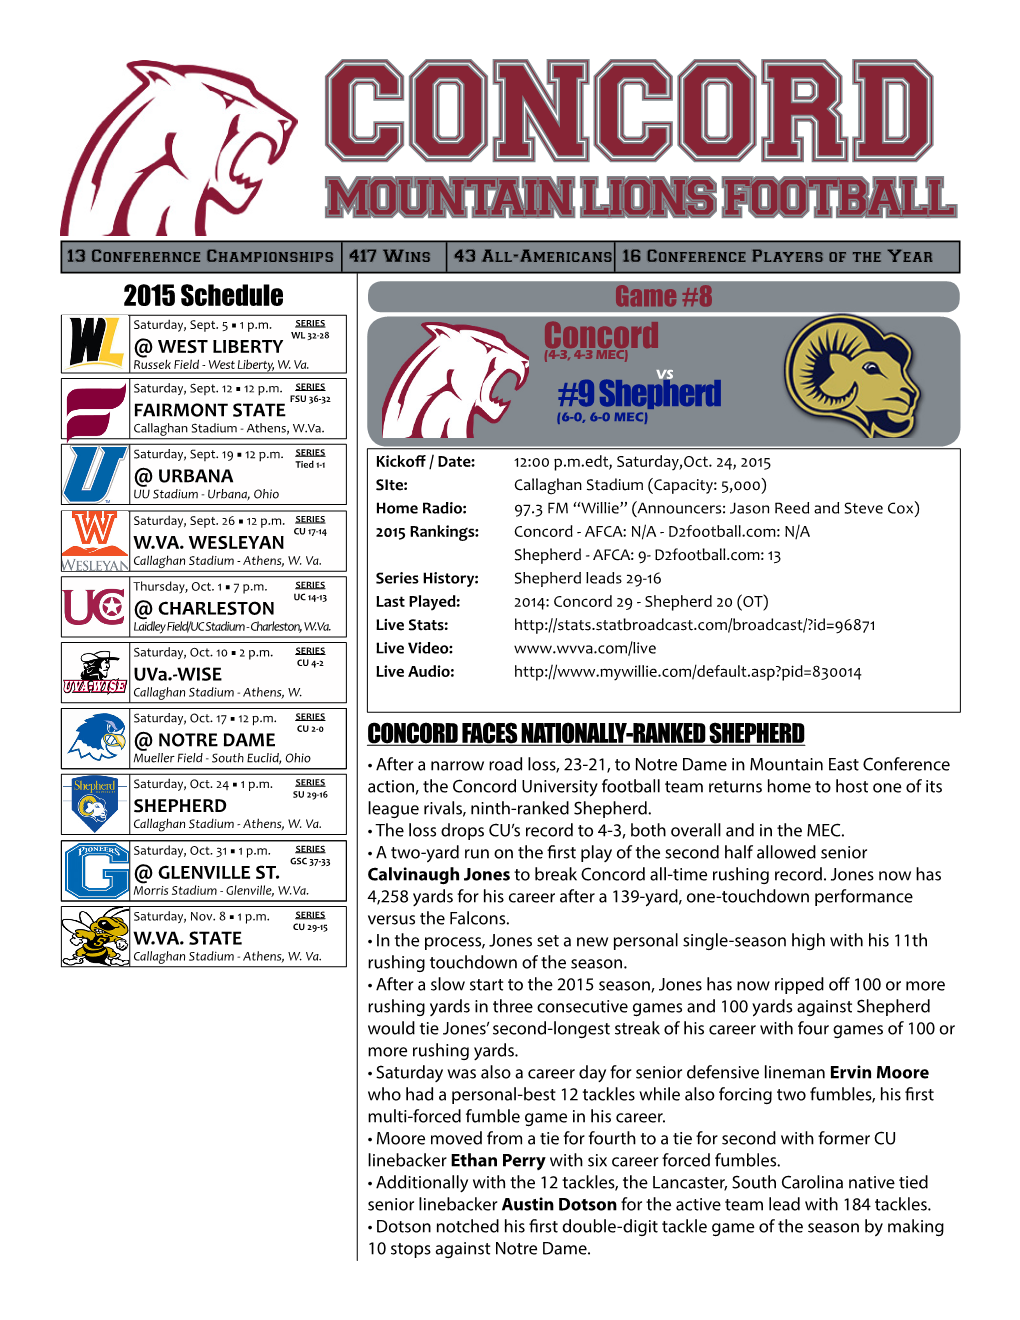 Mountain Lions Football